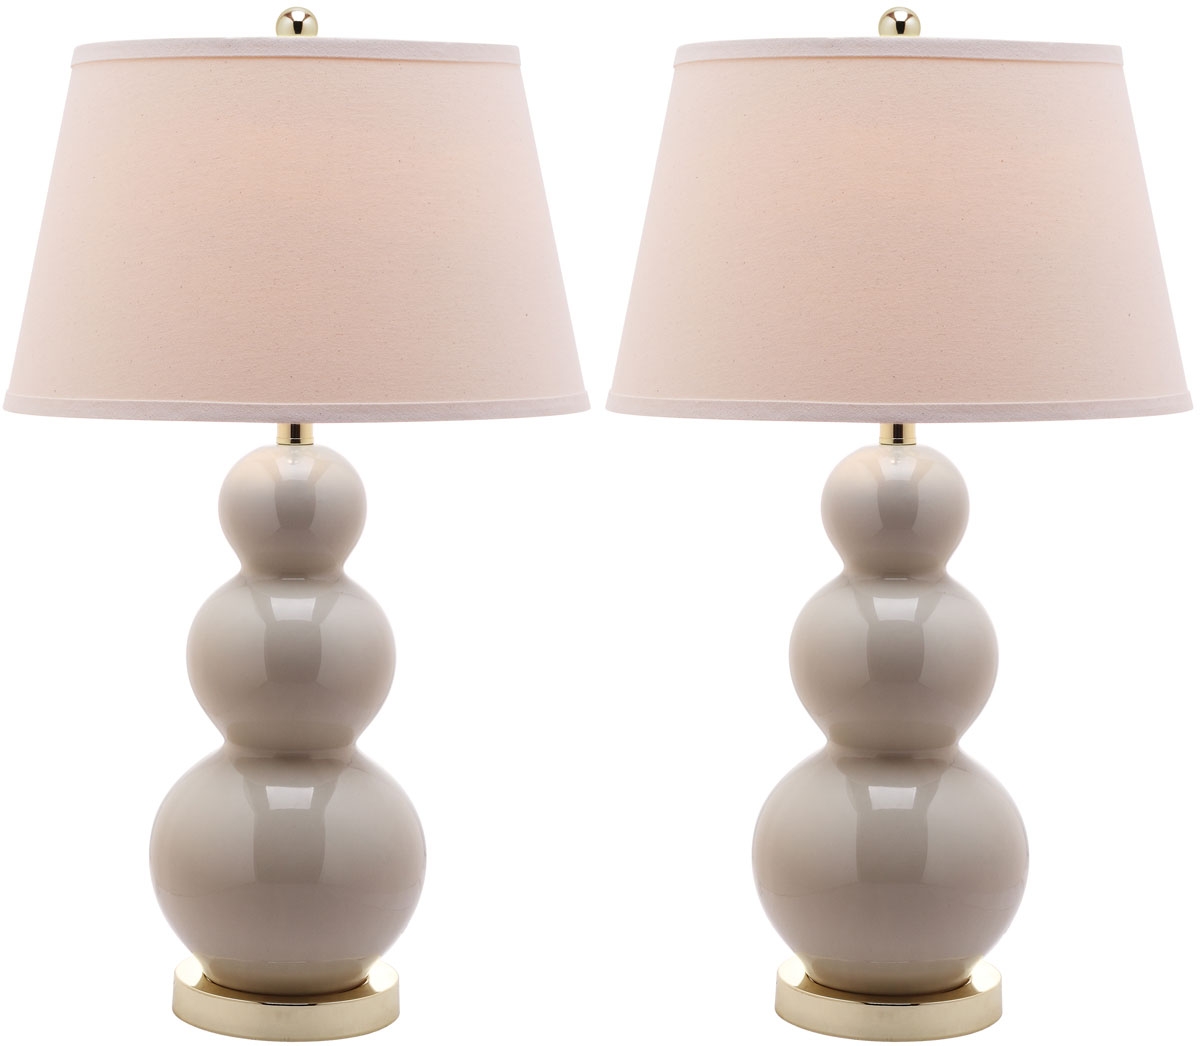 Pamela 28-Inch H Triple Gourd Ceramic Table Lamp - Light Grey - Safavieh - Image 1